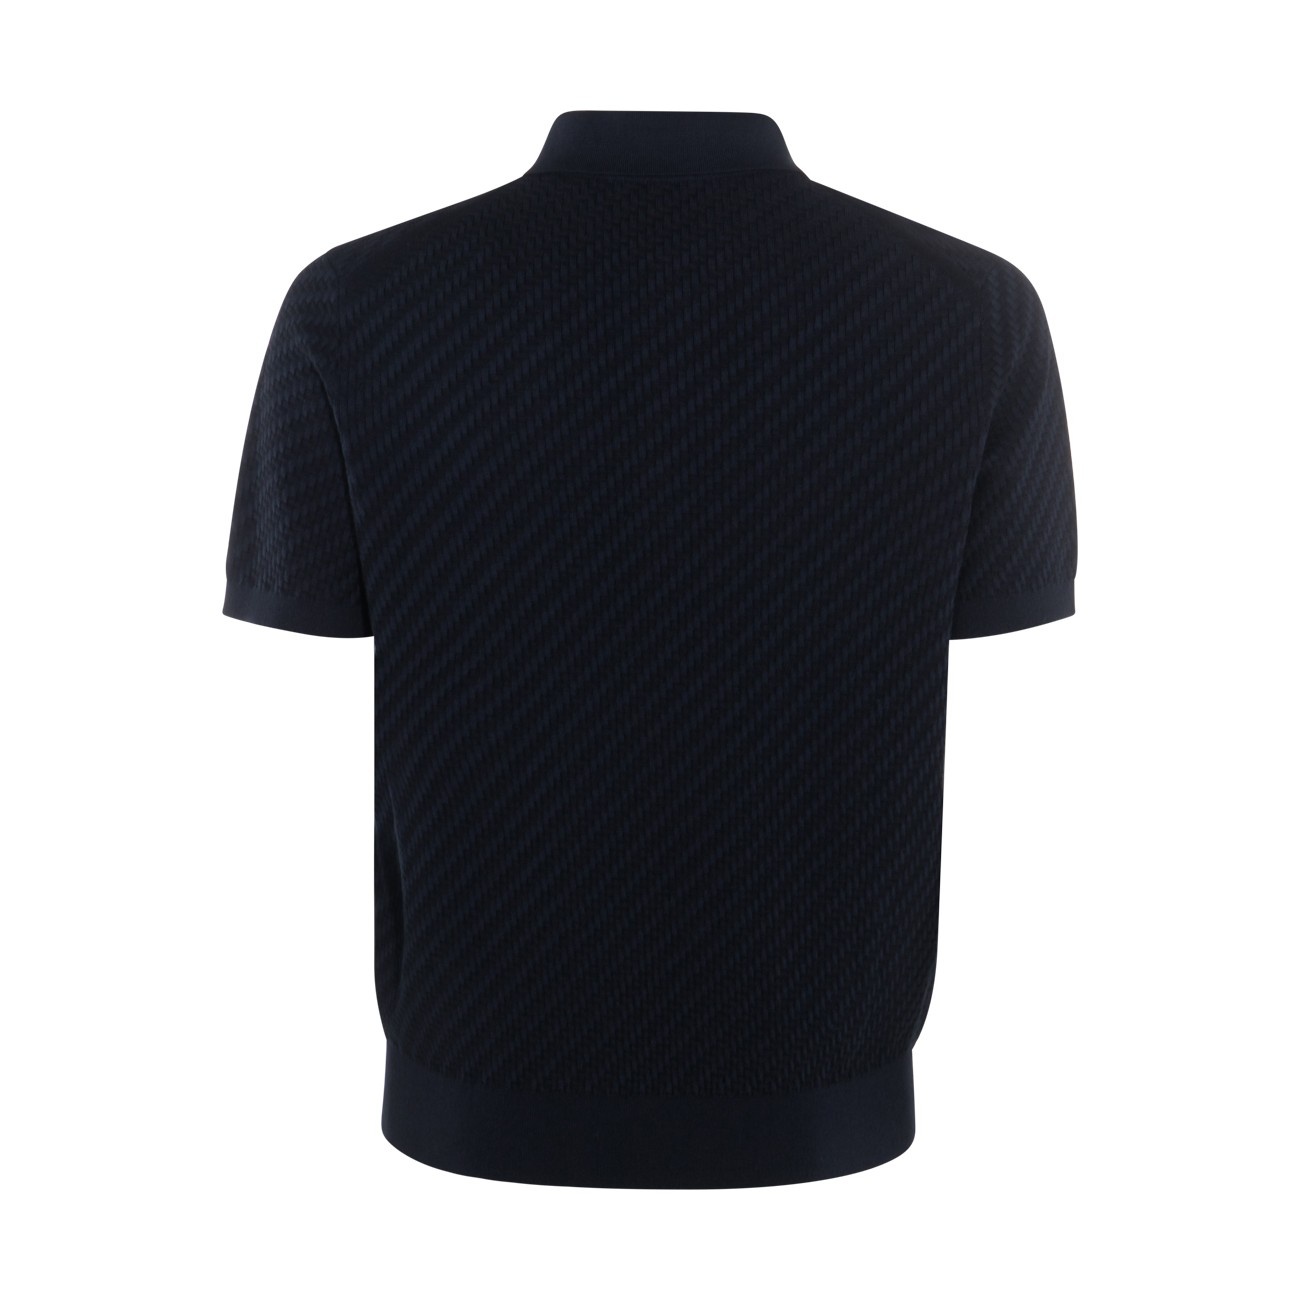 navy blue cotton blend polo shirt - 2